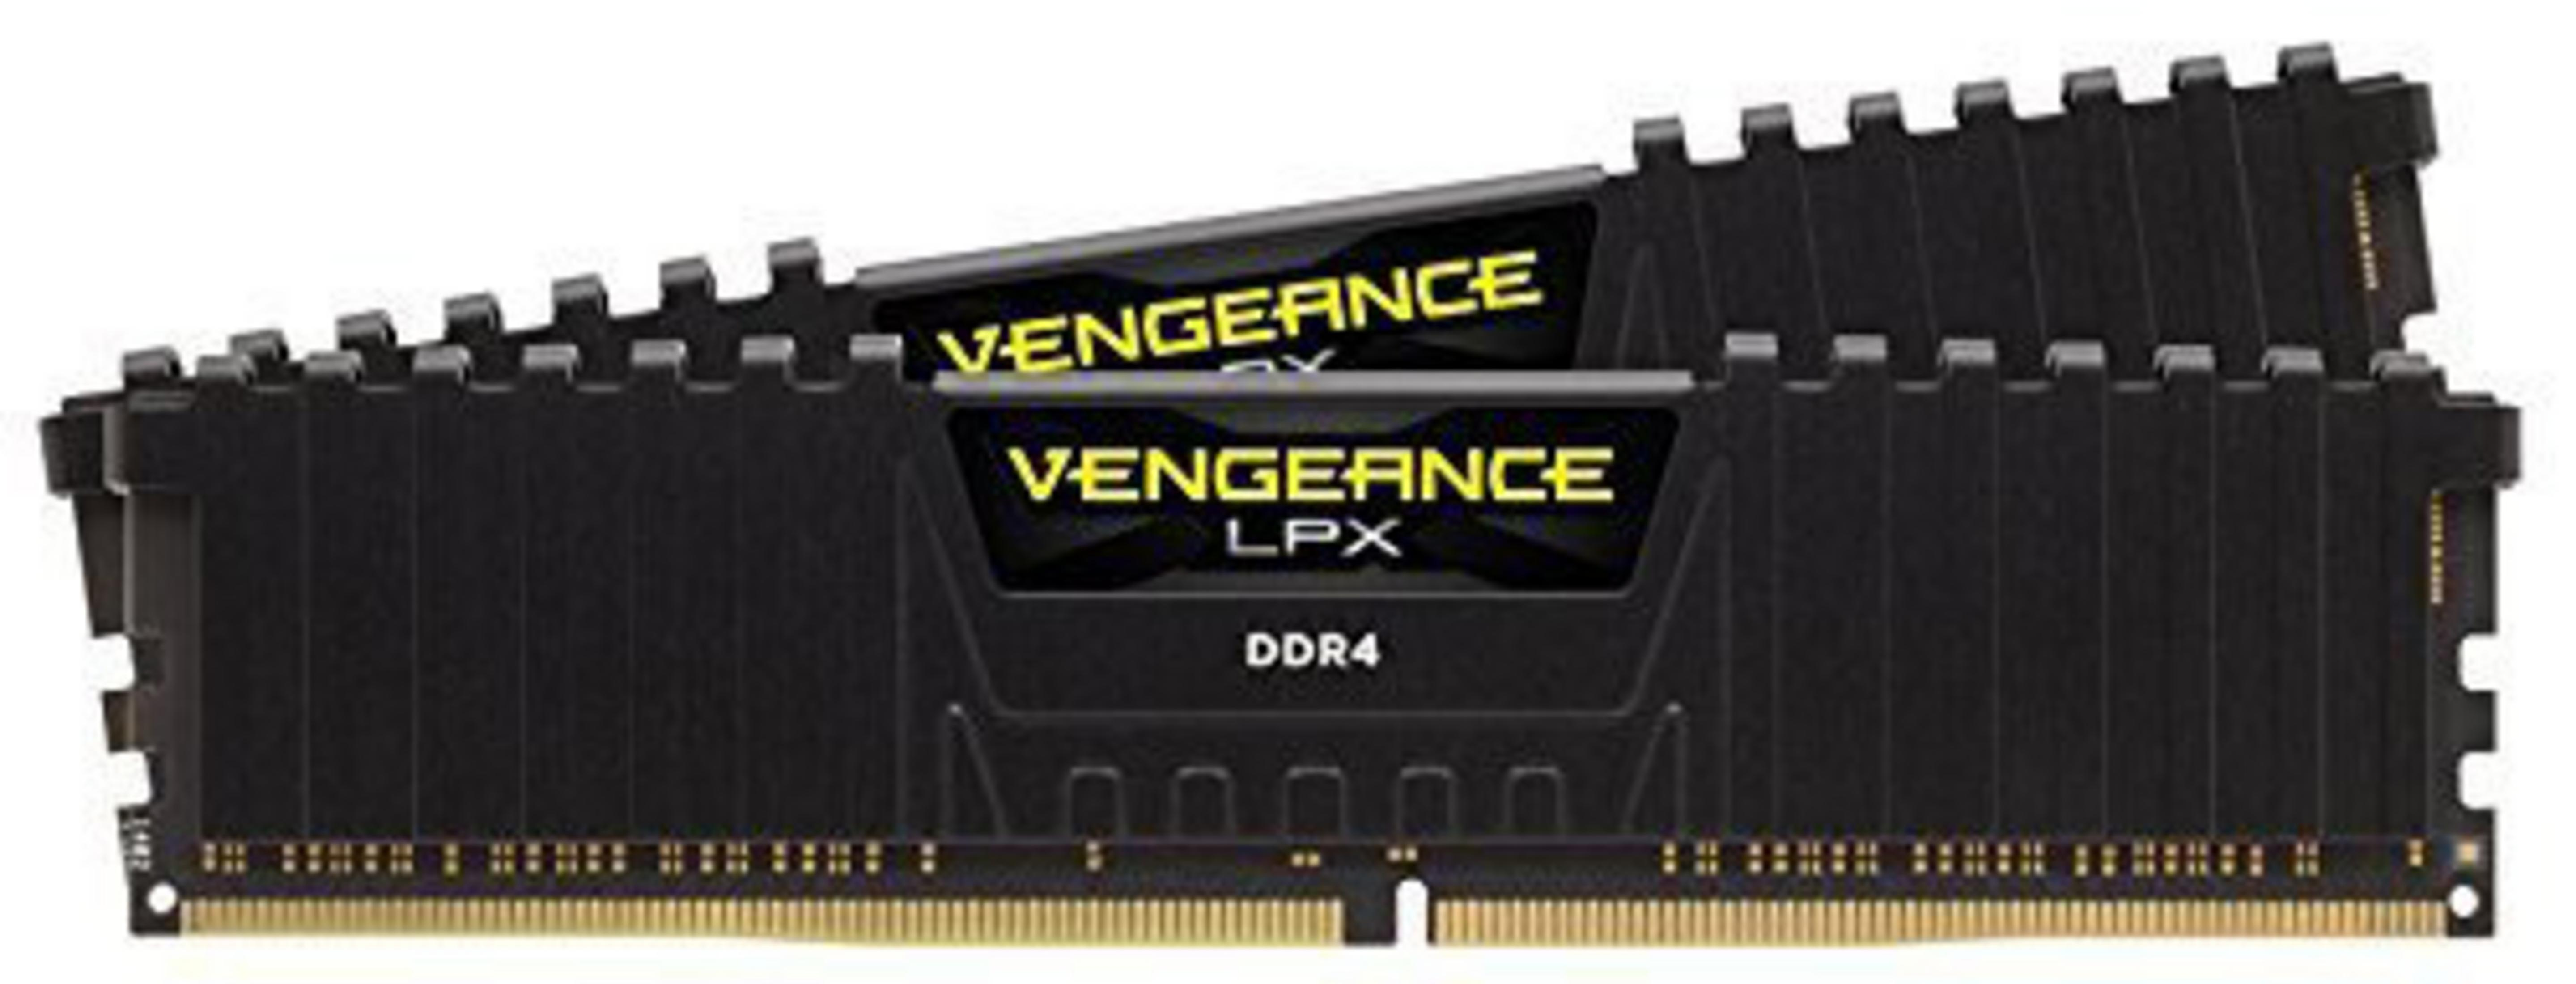 Arbeitsspeicher CORSAIR 2133MHZ DDR4 DDR4 LPX VENGEANCE CMK16GX4M2A2133C13 16GB 16 GB